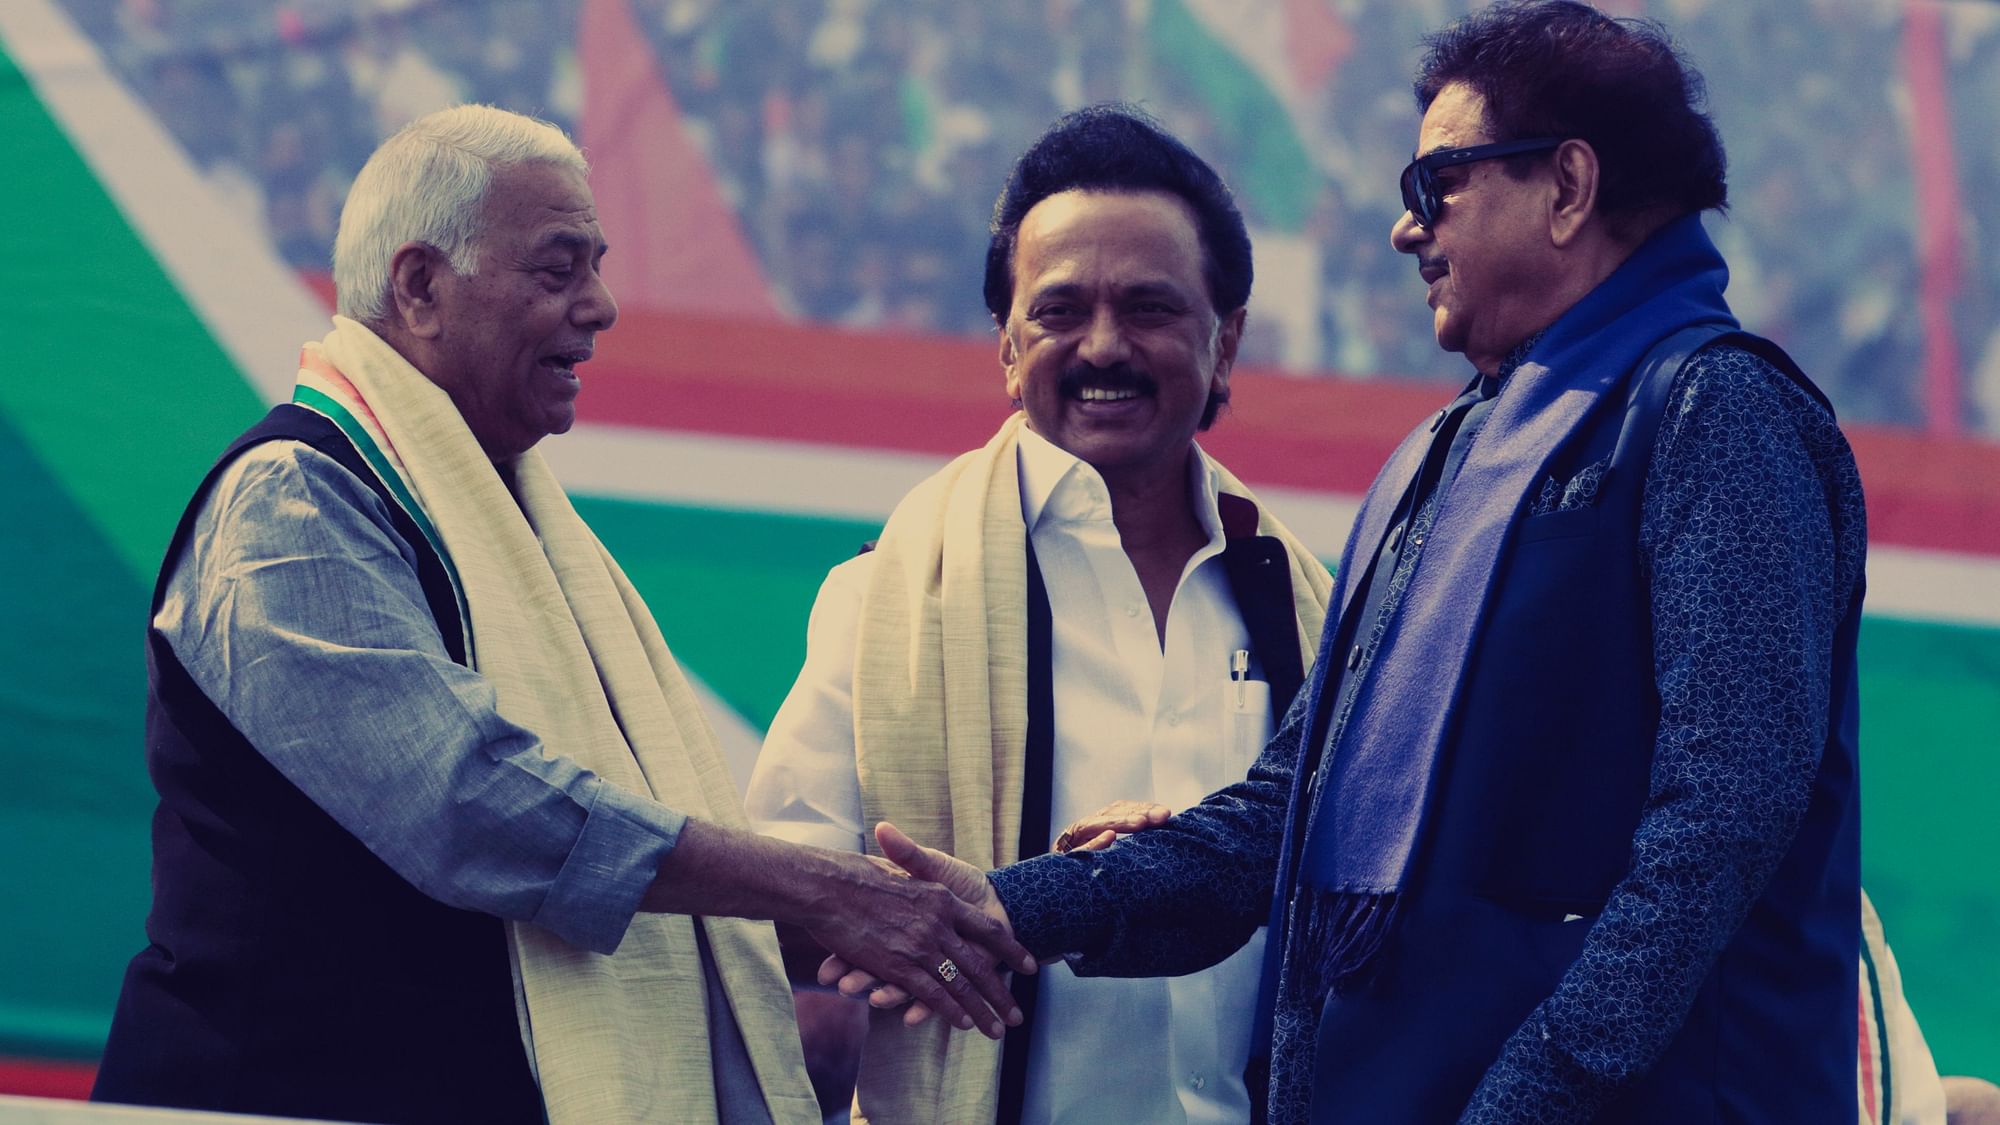 DMK leader M.K. Stalin, centre, ex Indian finance minister Yashwant Sinha, left, BJP lawmaker Shatrughan Sinha, right, in Kolkata on Saturday,&nbsp; 19 Jan. Image used for representational purposes.